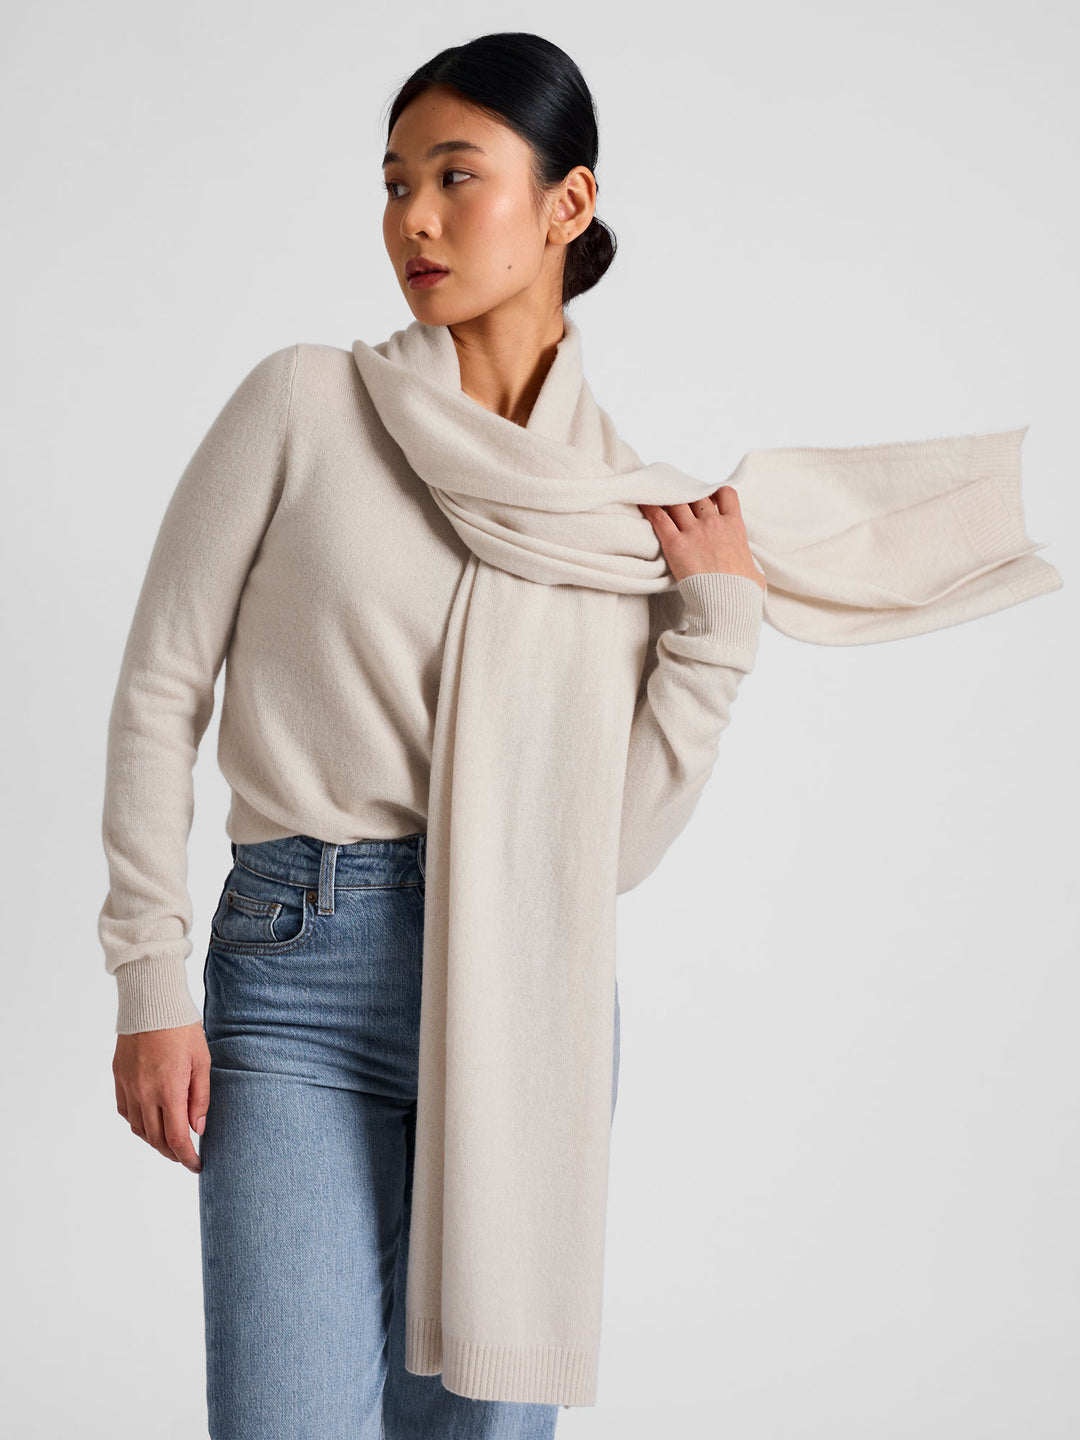 Cashmere scarf in 100% cashmere. Color: Creme. Scandinavian design by Kashmina.